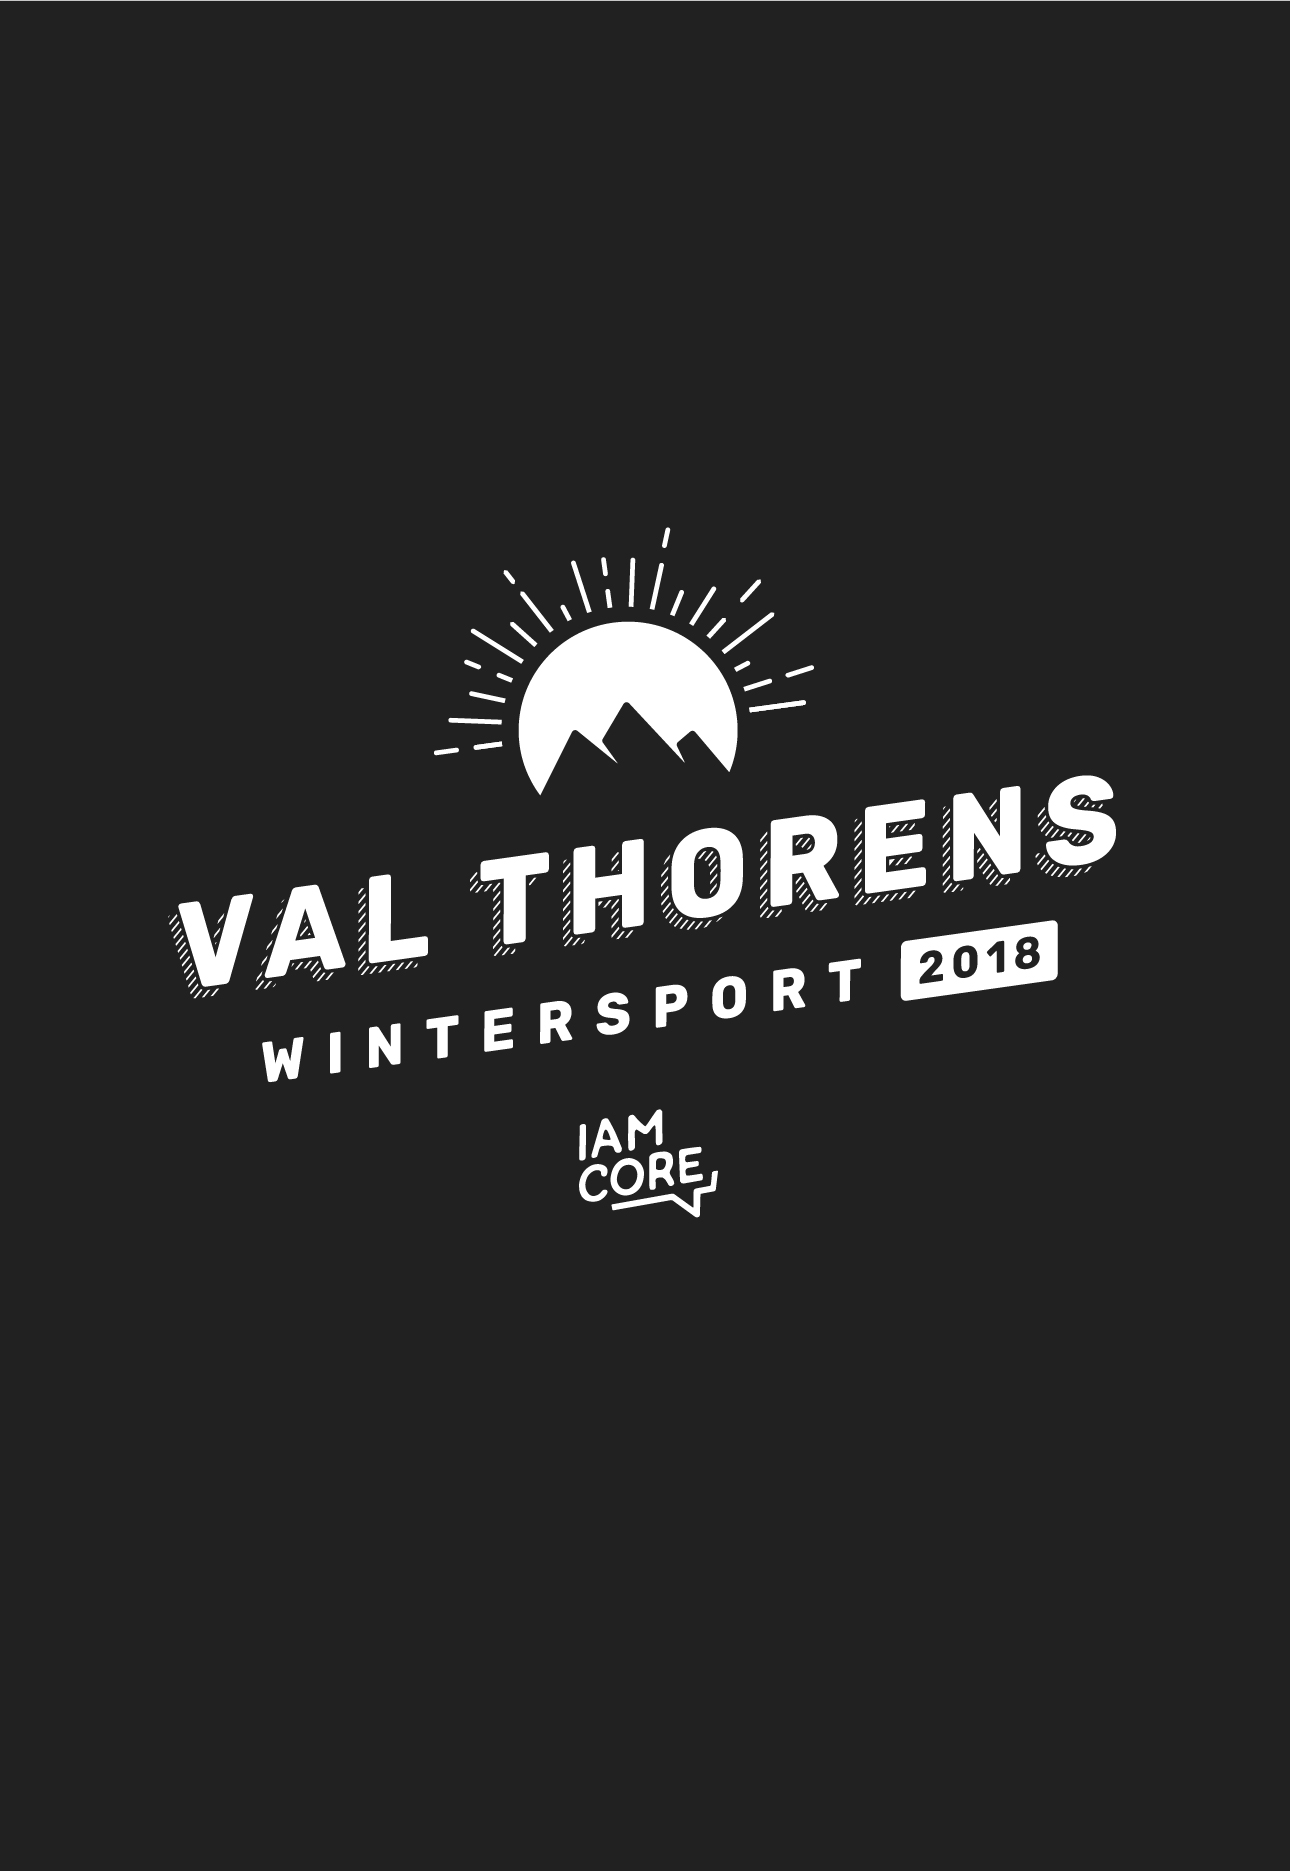 Design Val Thorens Wintersport 2018